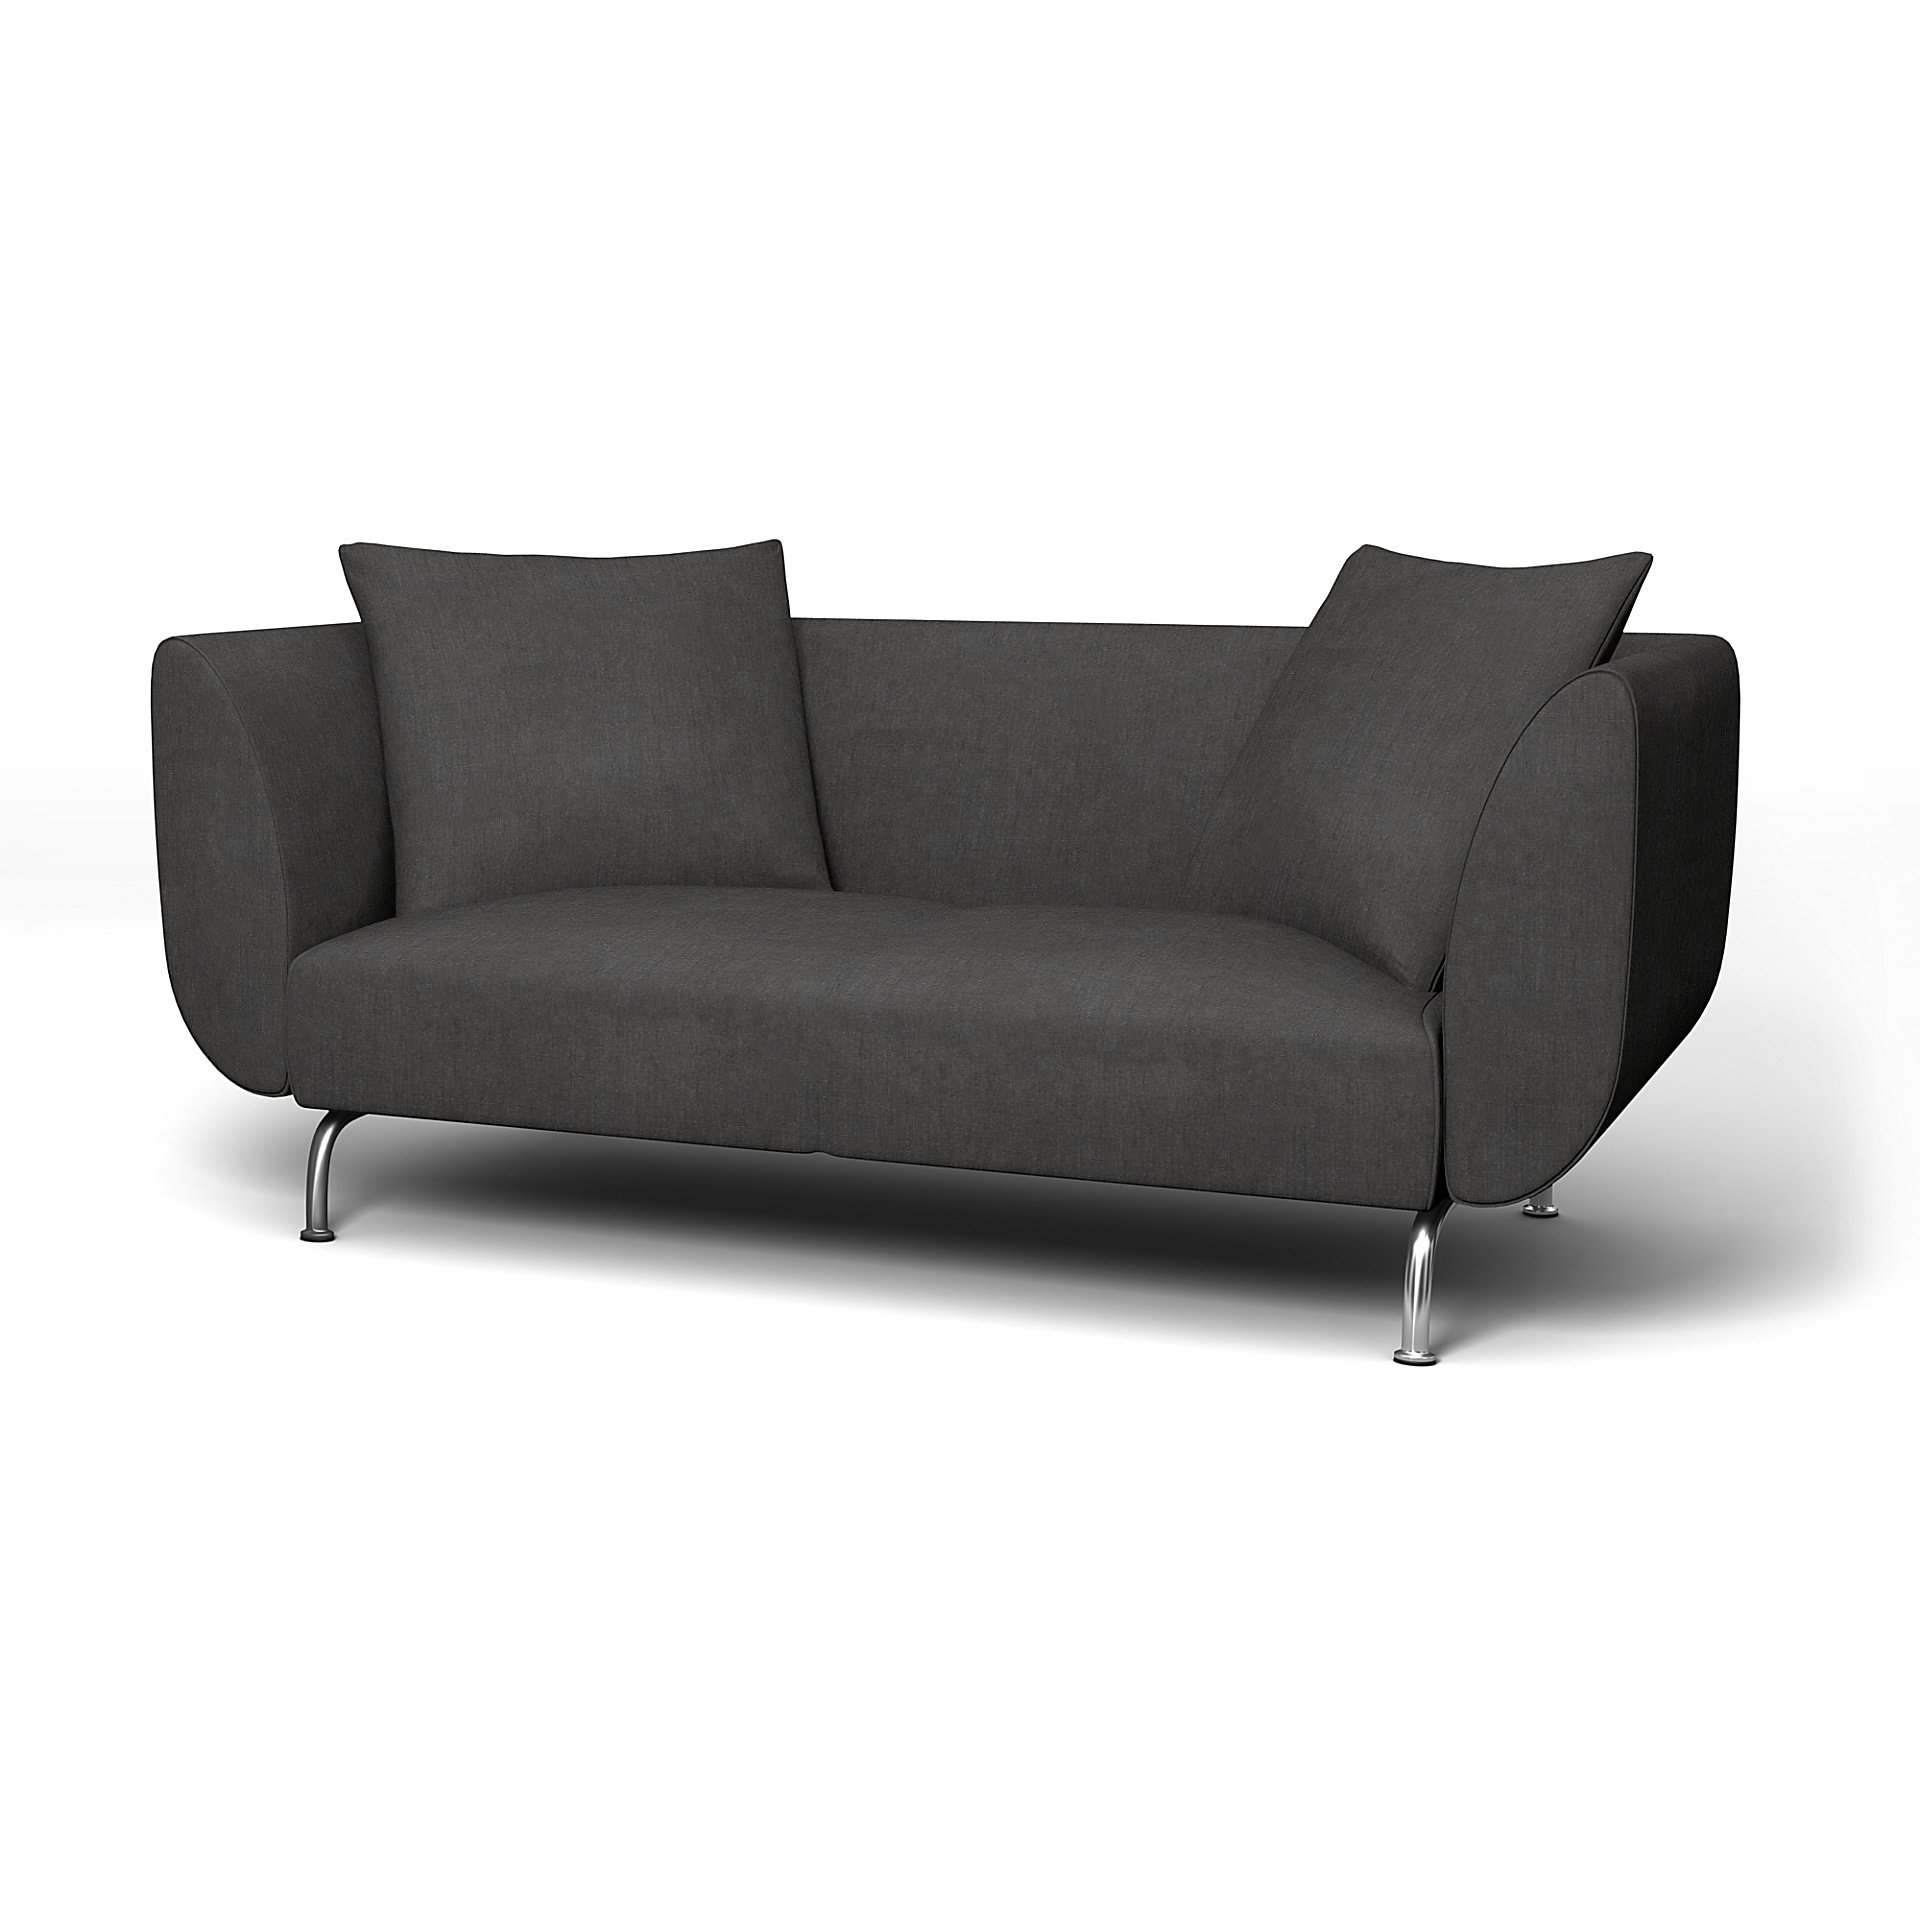 IKEA - Stromstad 2 Seater Sofa Cover, Espresso, Linen - Bemz